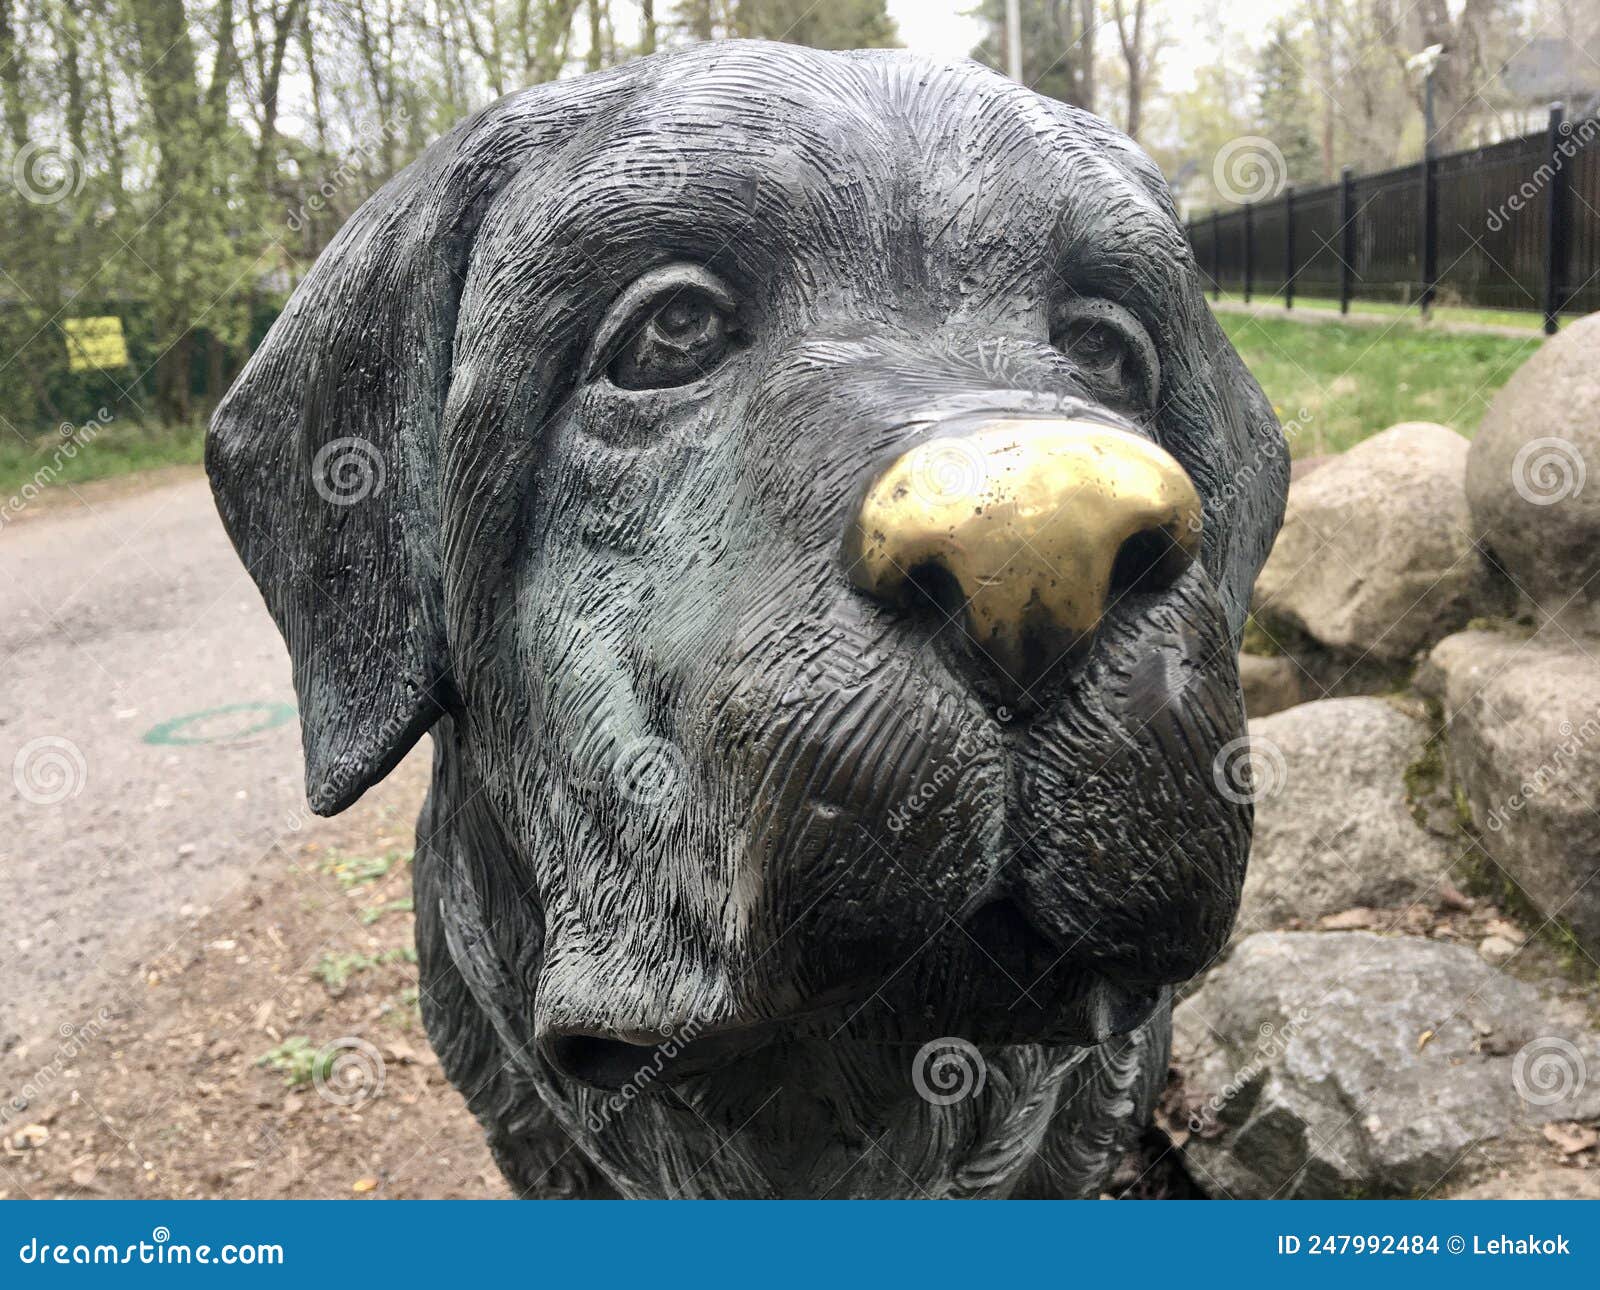 ZELENOGORSK, RUSSIA - MAY 11, 2020: Dog Sculpture Closeup Editorial